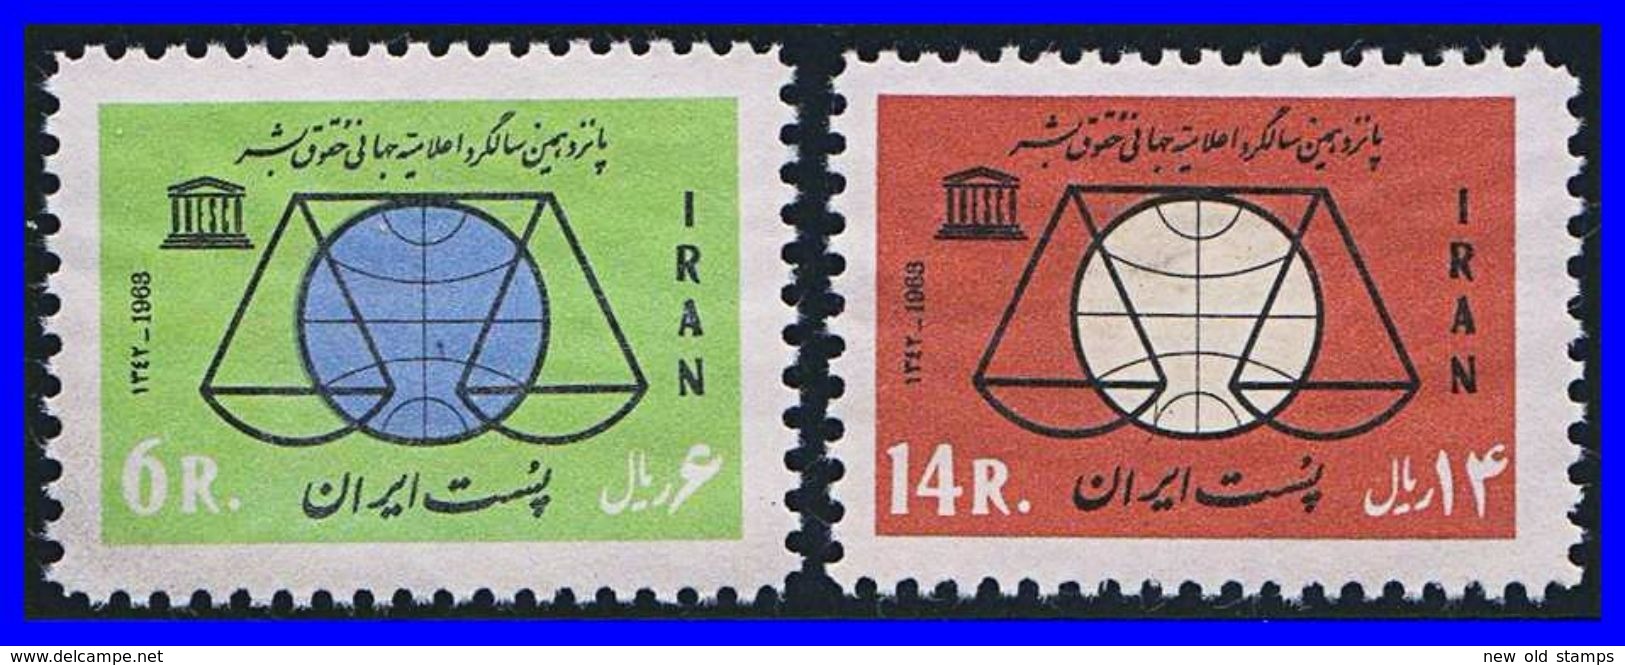 PERSIA 1963 UNO / HUMAN RIGHTS SC#1271-72 MNH CV$10.00 (H-S BX) - Iran